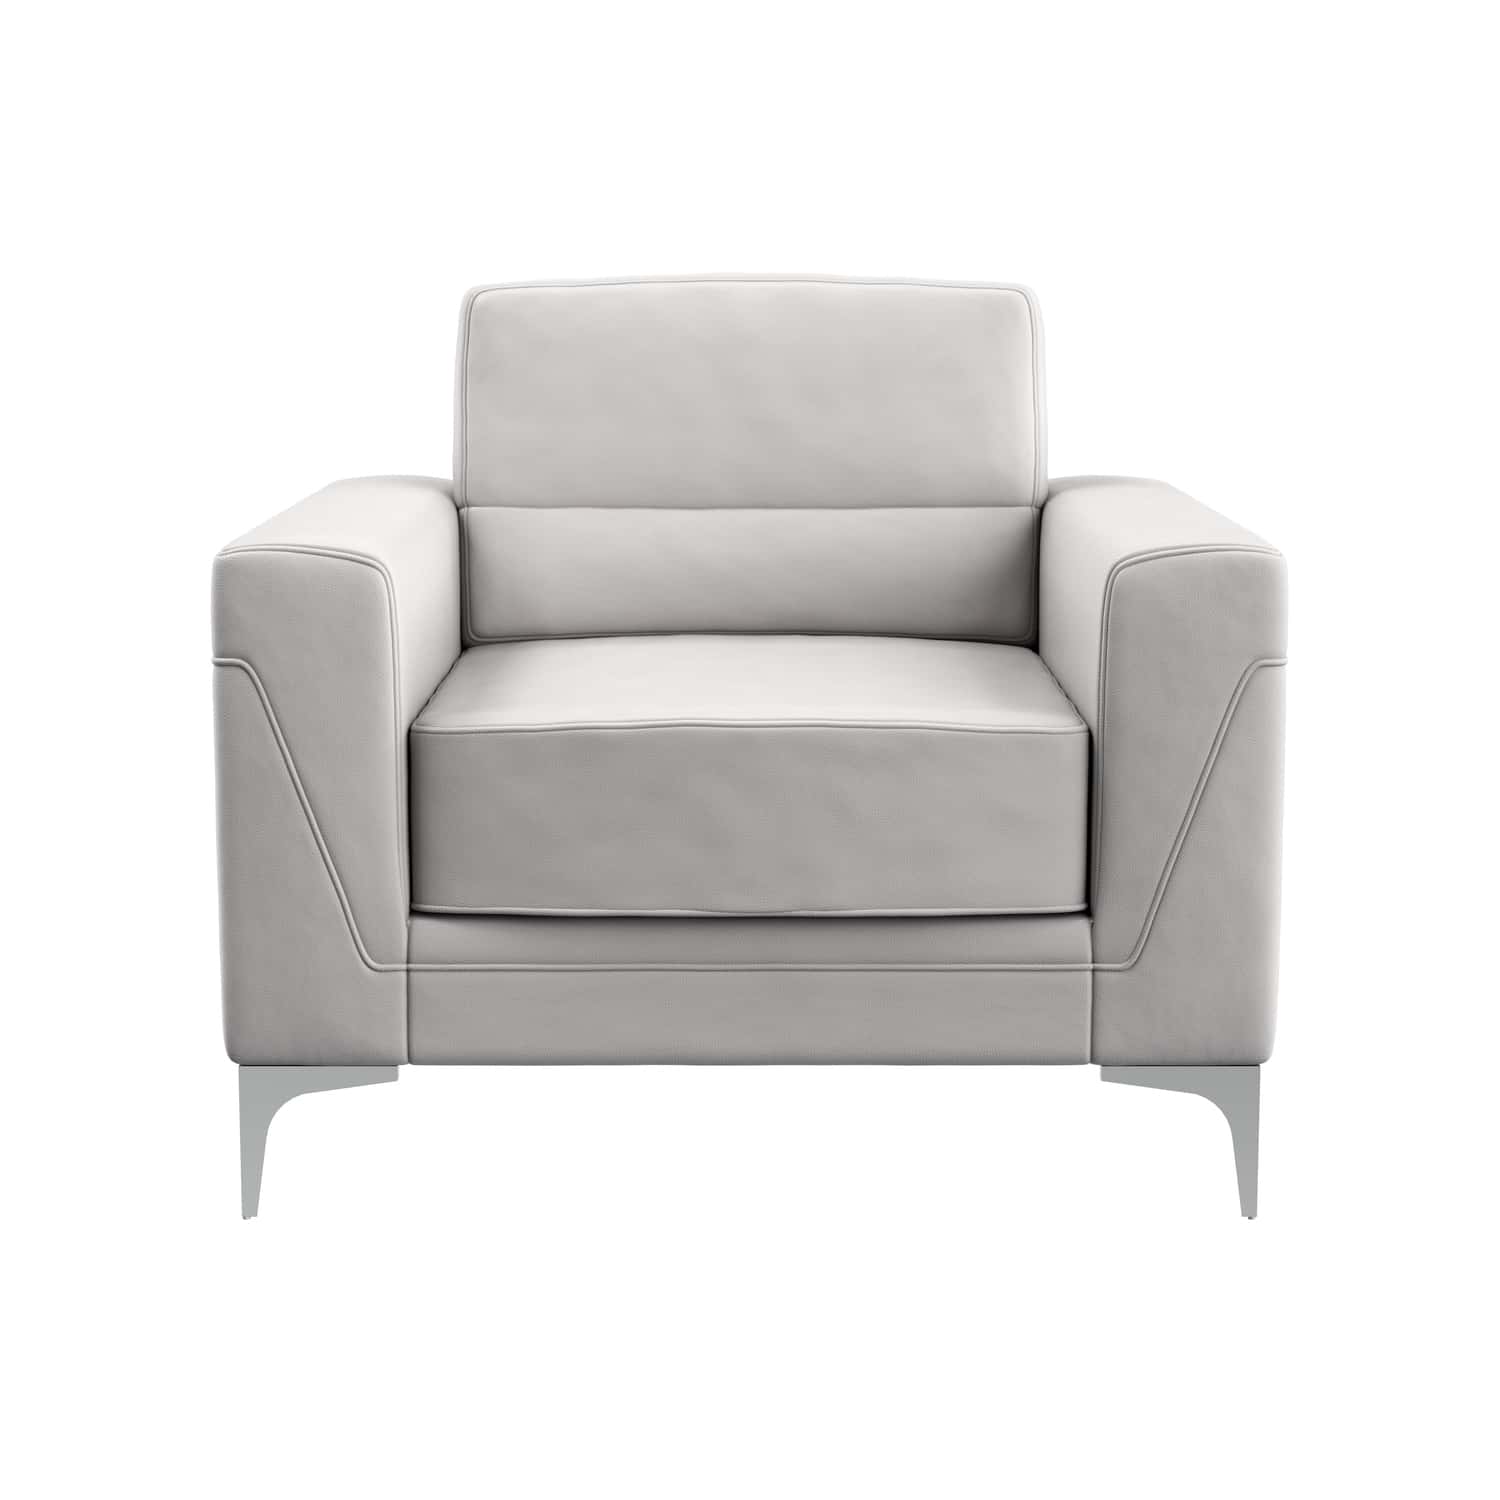 u6109 light gray pvc chairglobal furniture